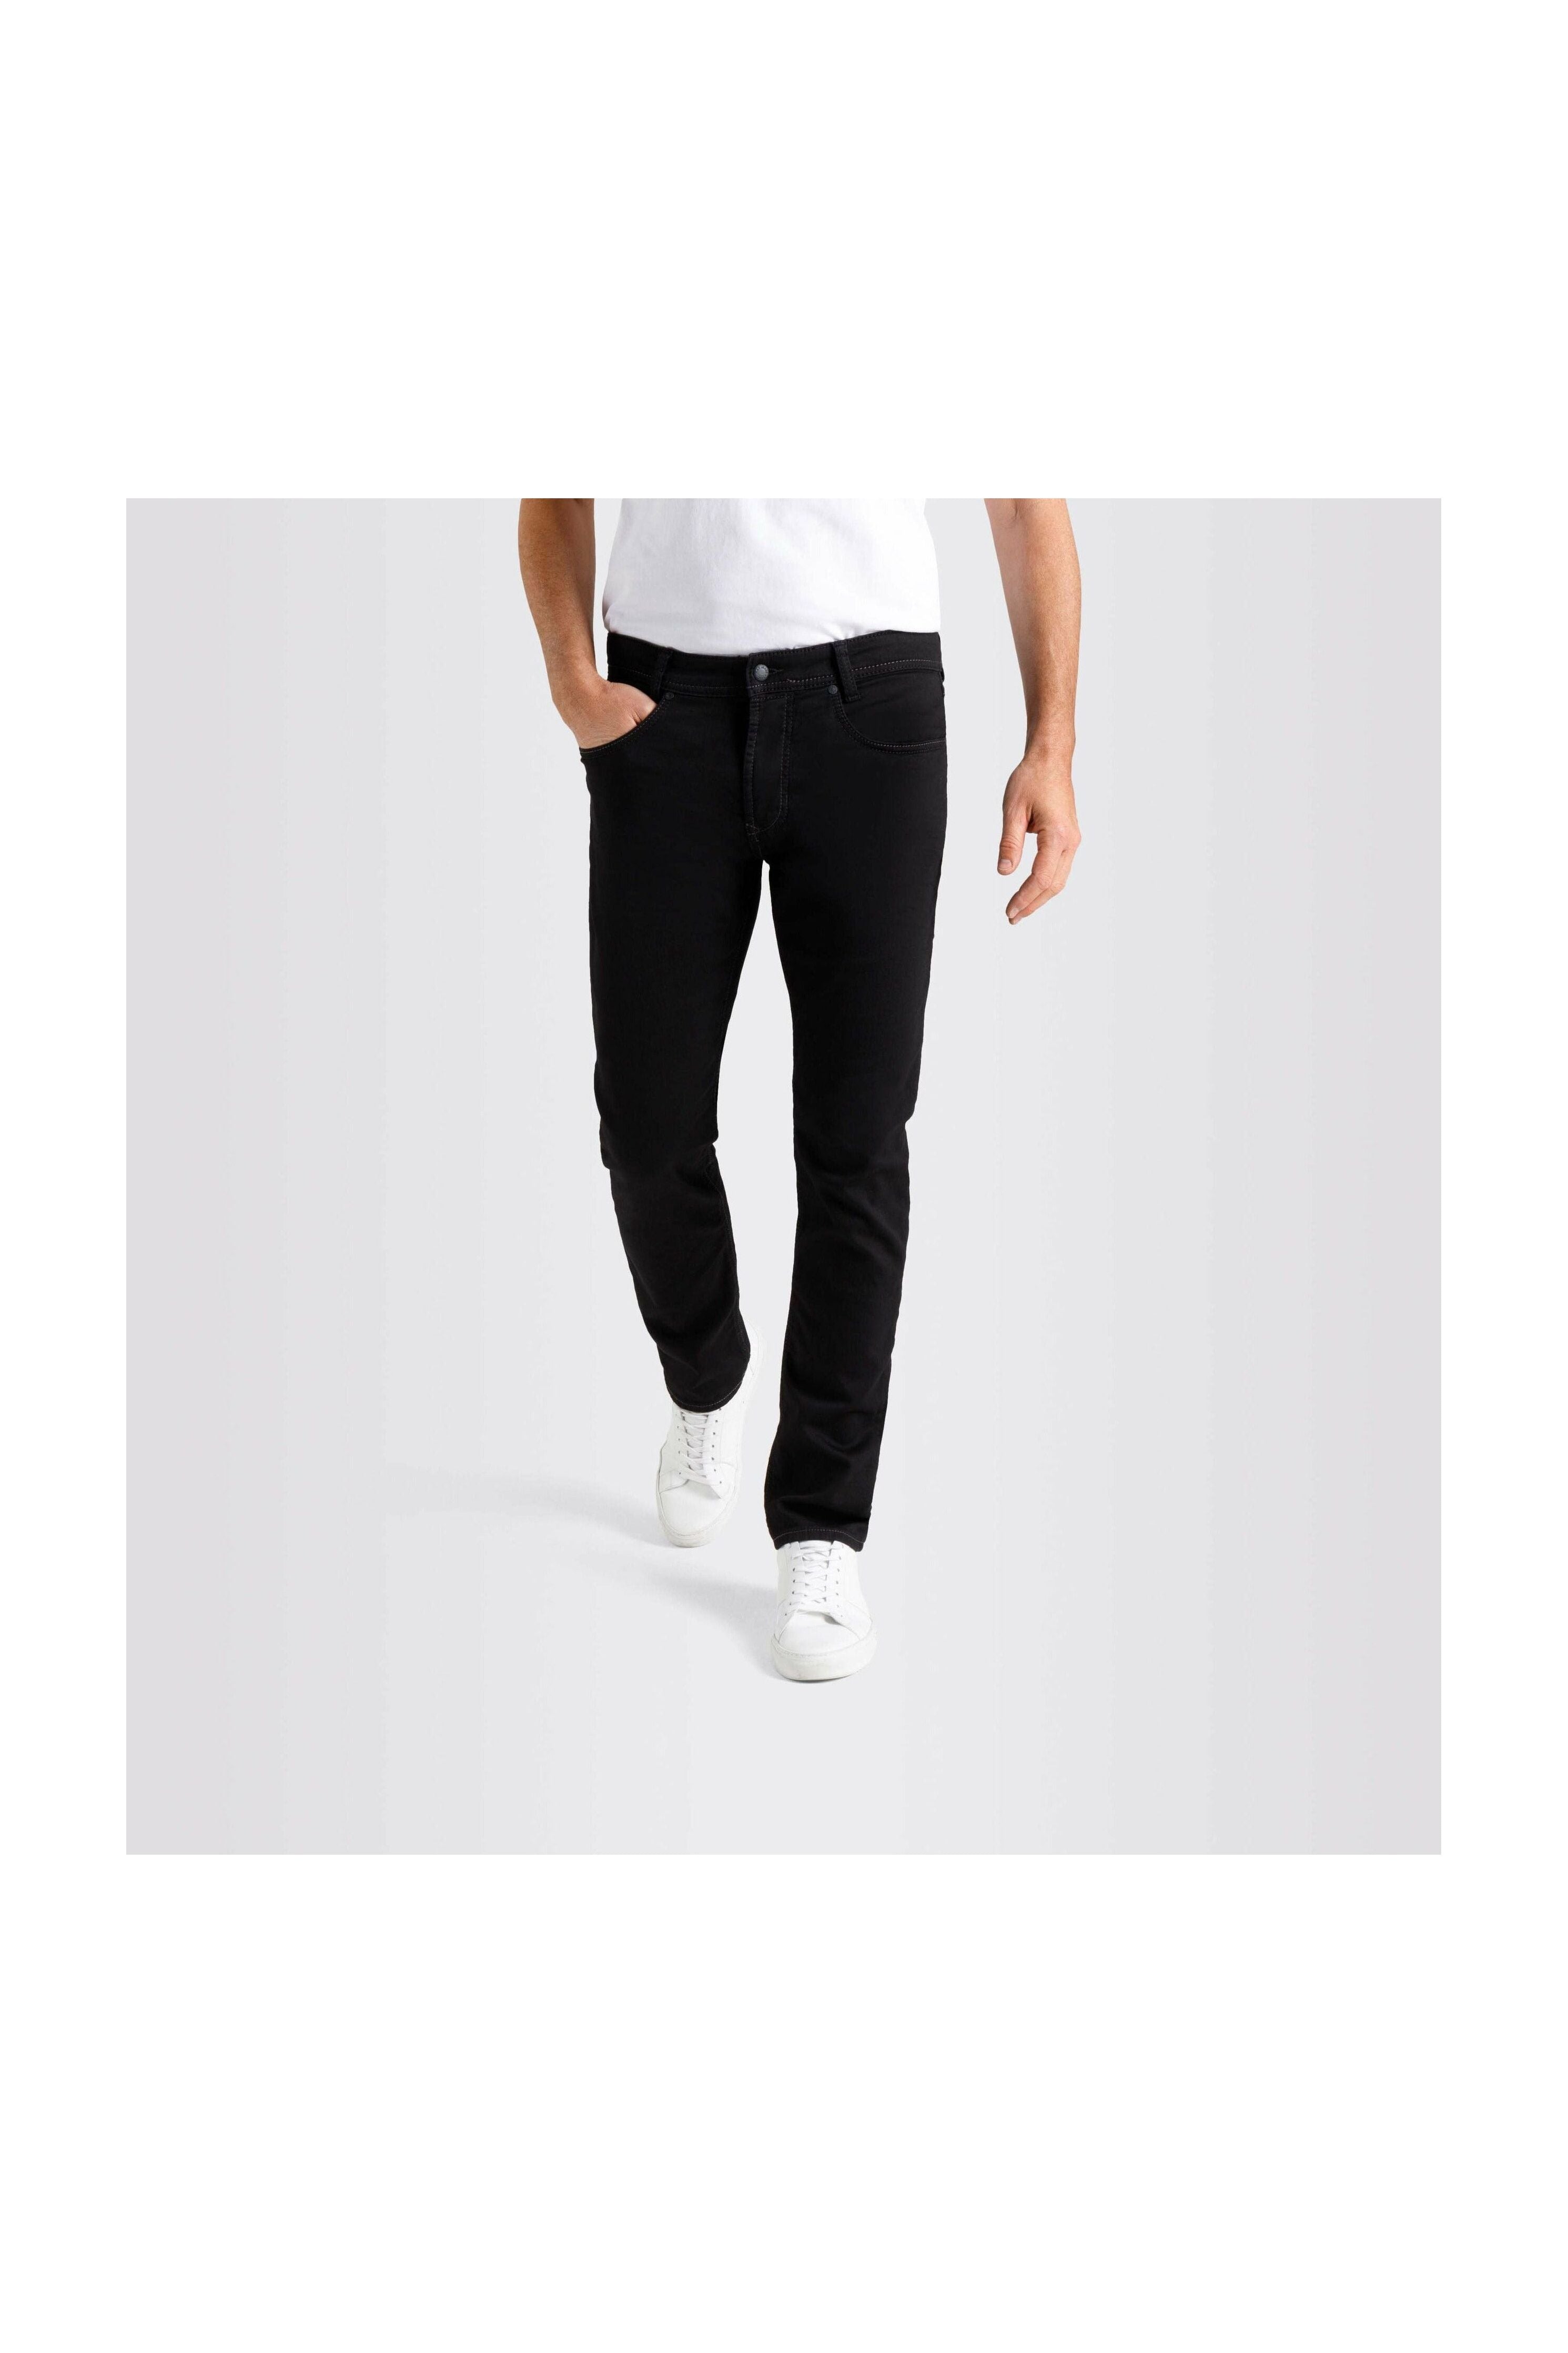 Jeans- Clean – | Robertson Jeans Men\'s Jog n Mac Madison 0590-00-0994L Black/Black H896